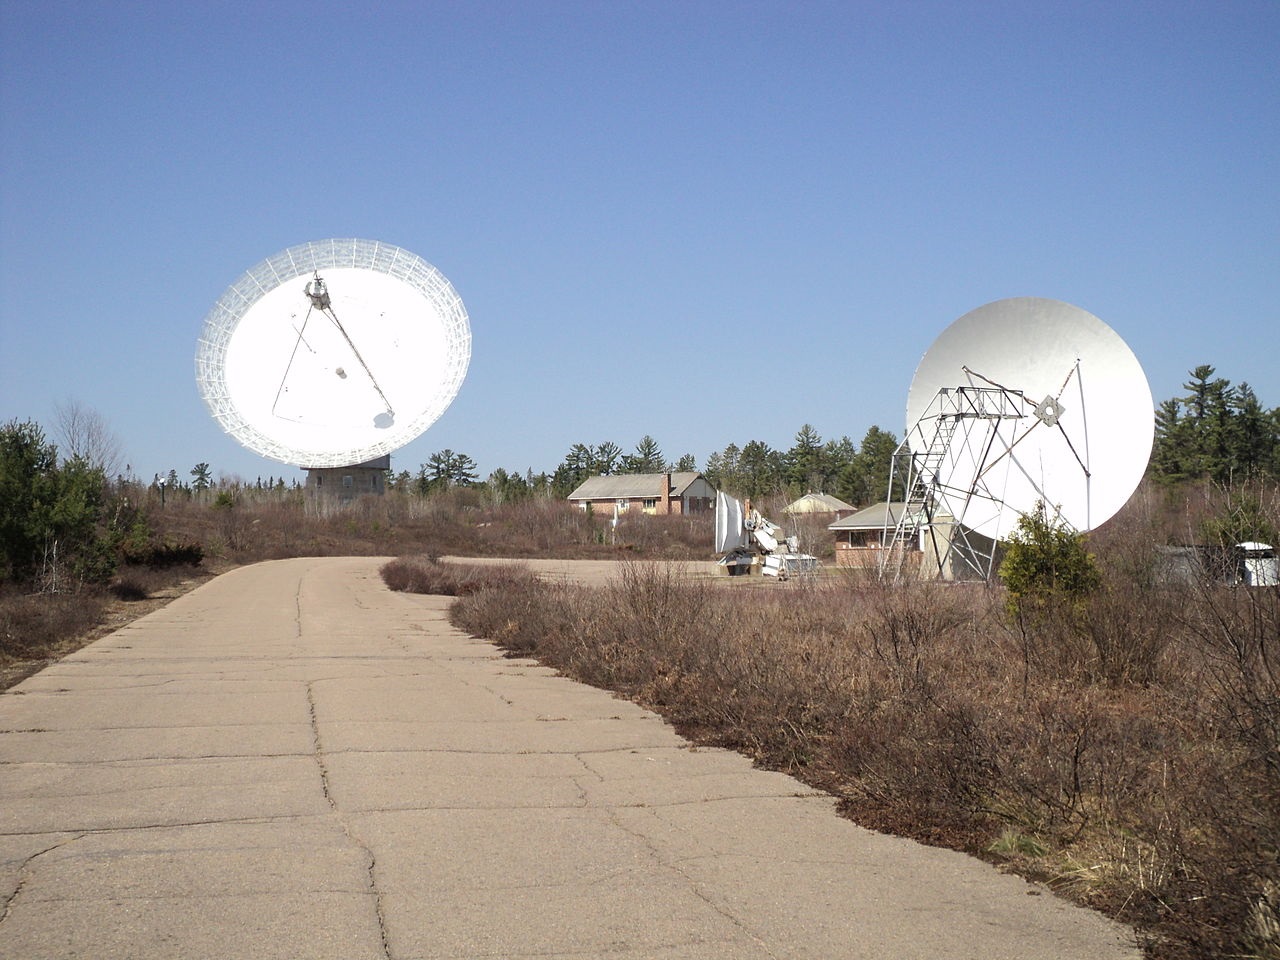 Algonquin Radio Observatory